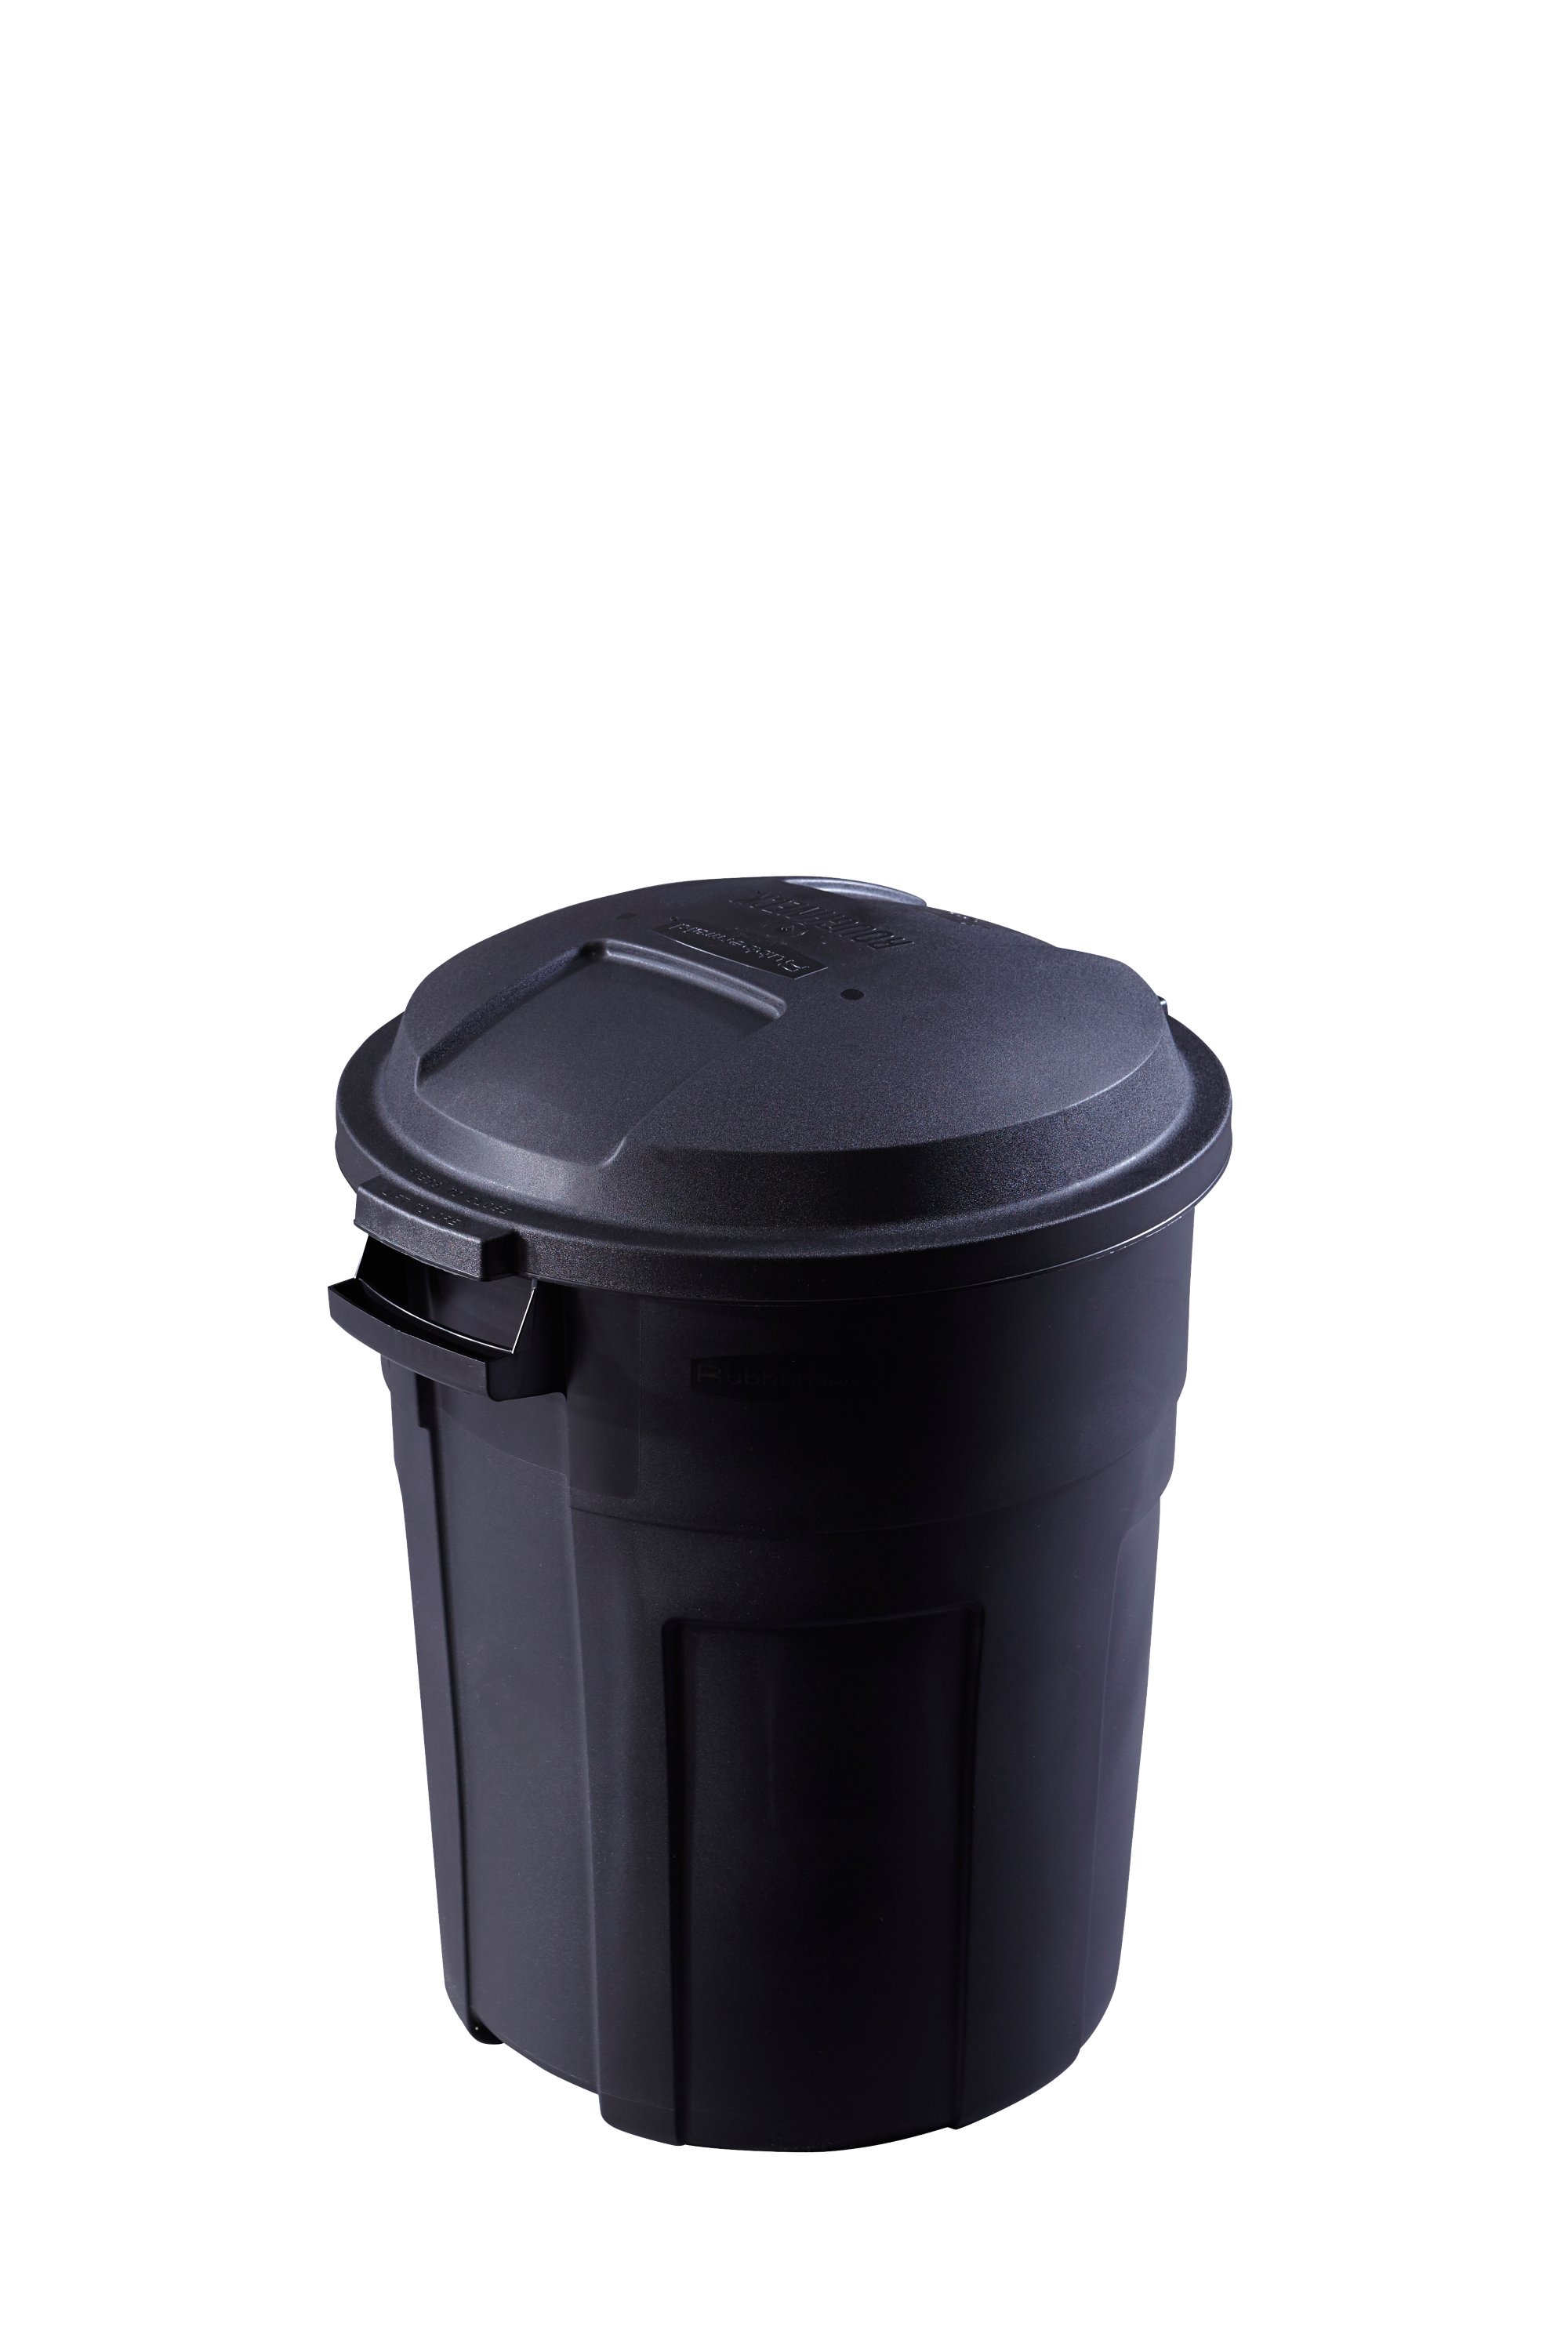 Buy Rubbermaid® Brute® Trash Can - 20 Gallon, White - 1 EACH (53BXPRUB320CW)